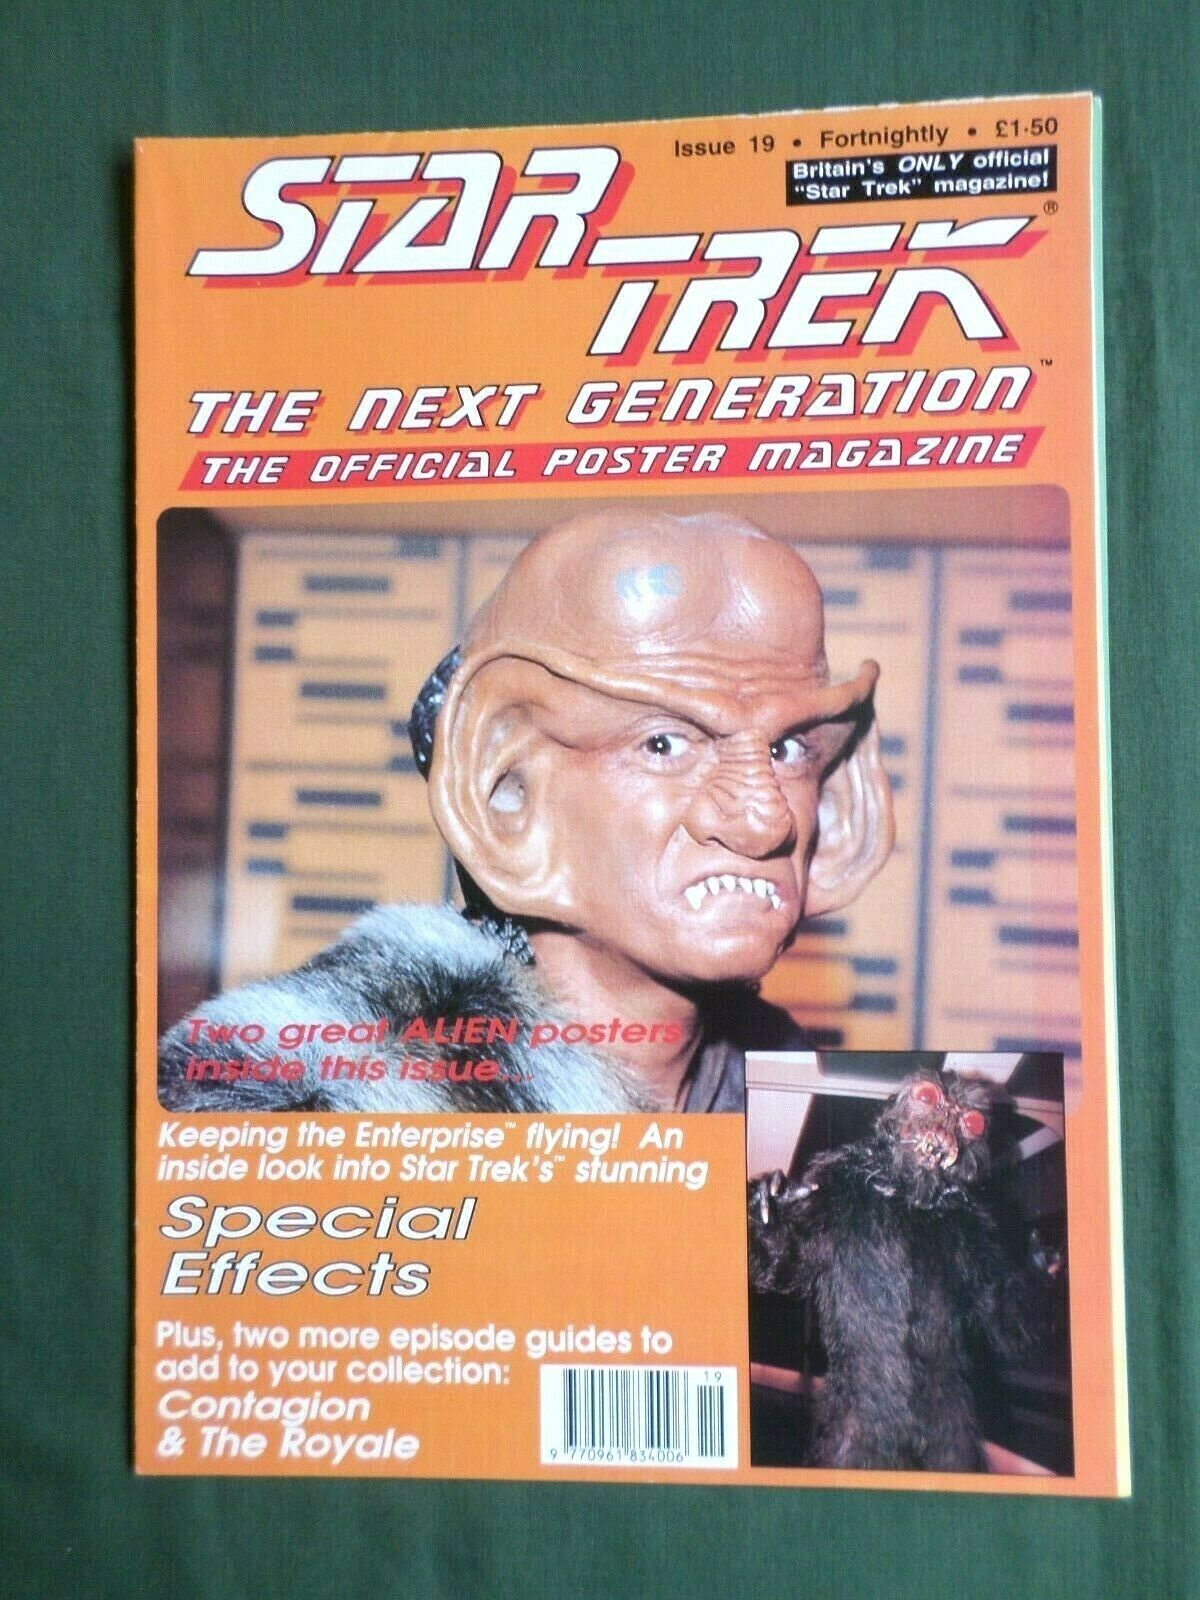 Star Trek: The Next Generation Poster Magazine #19